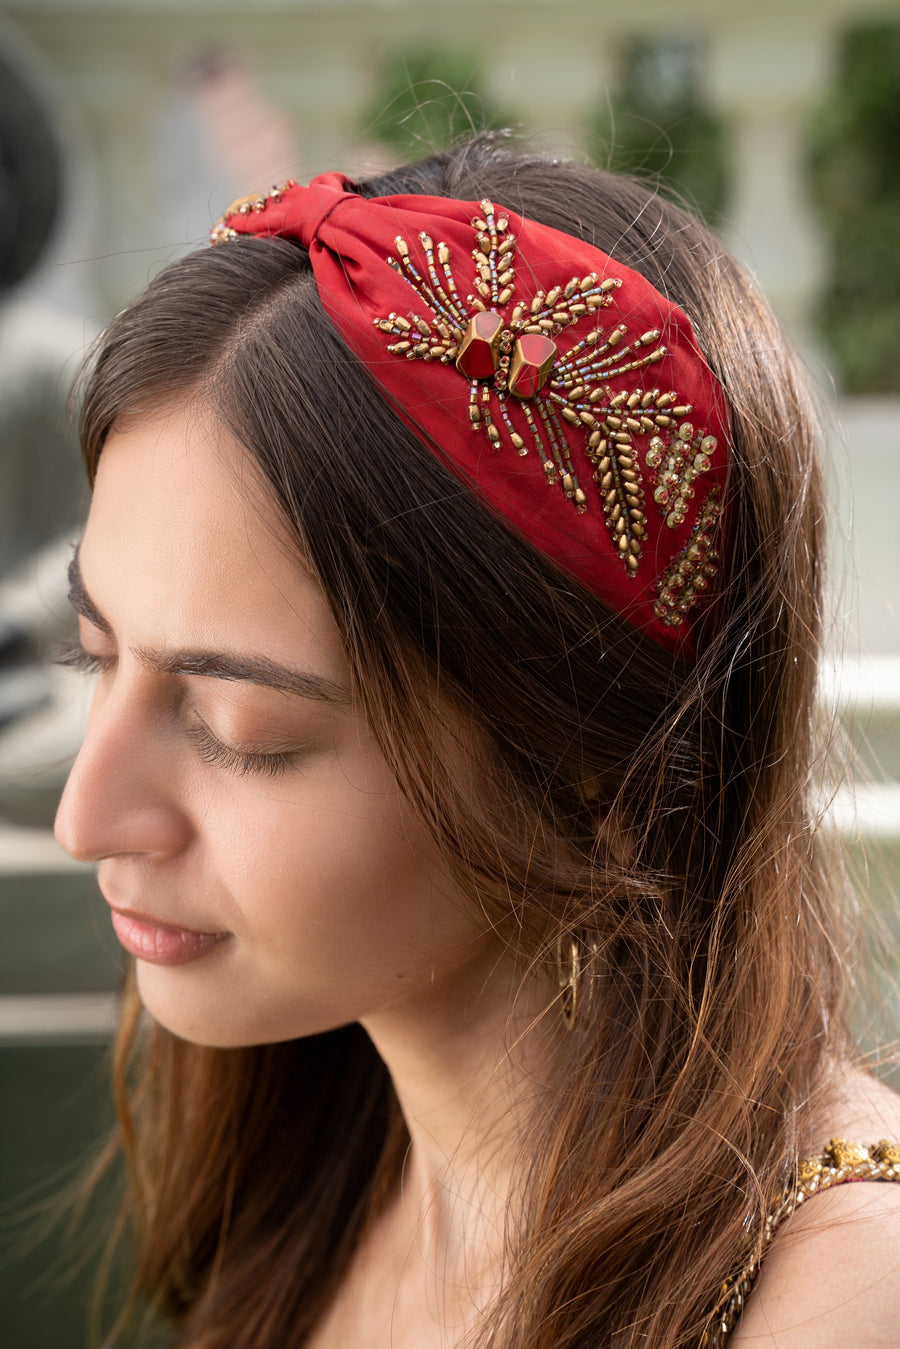 Red Crepe Headband With Embellishments